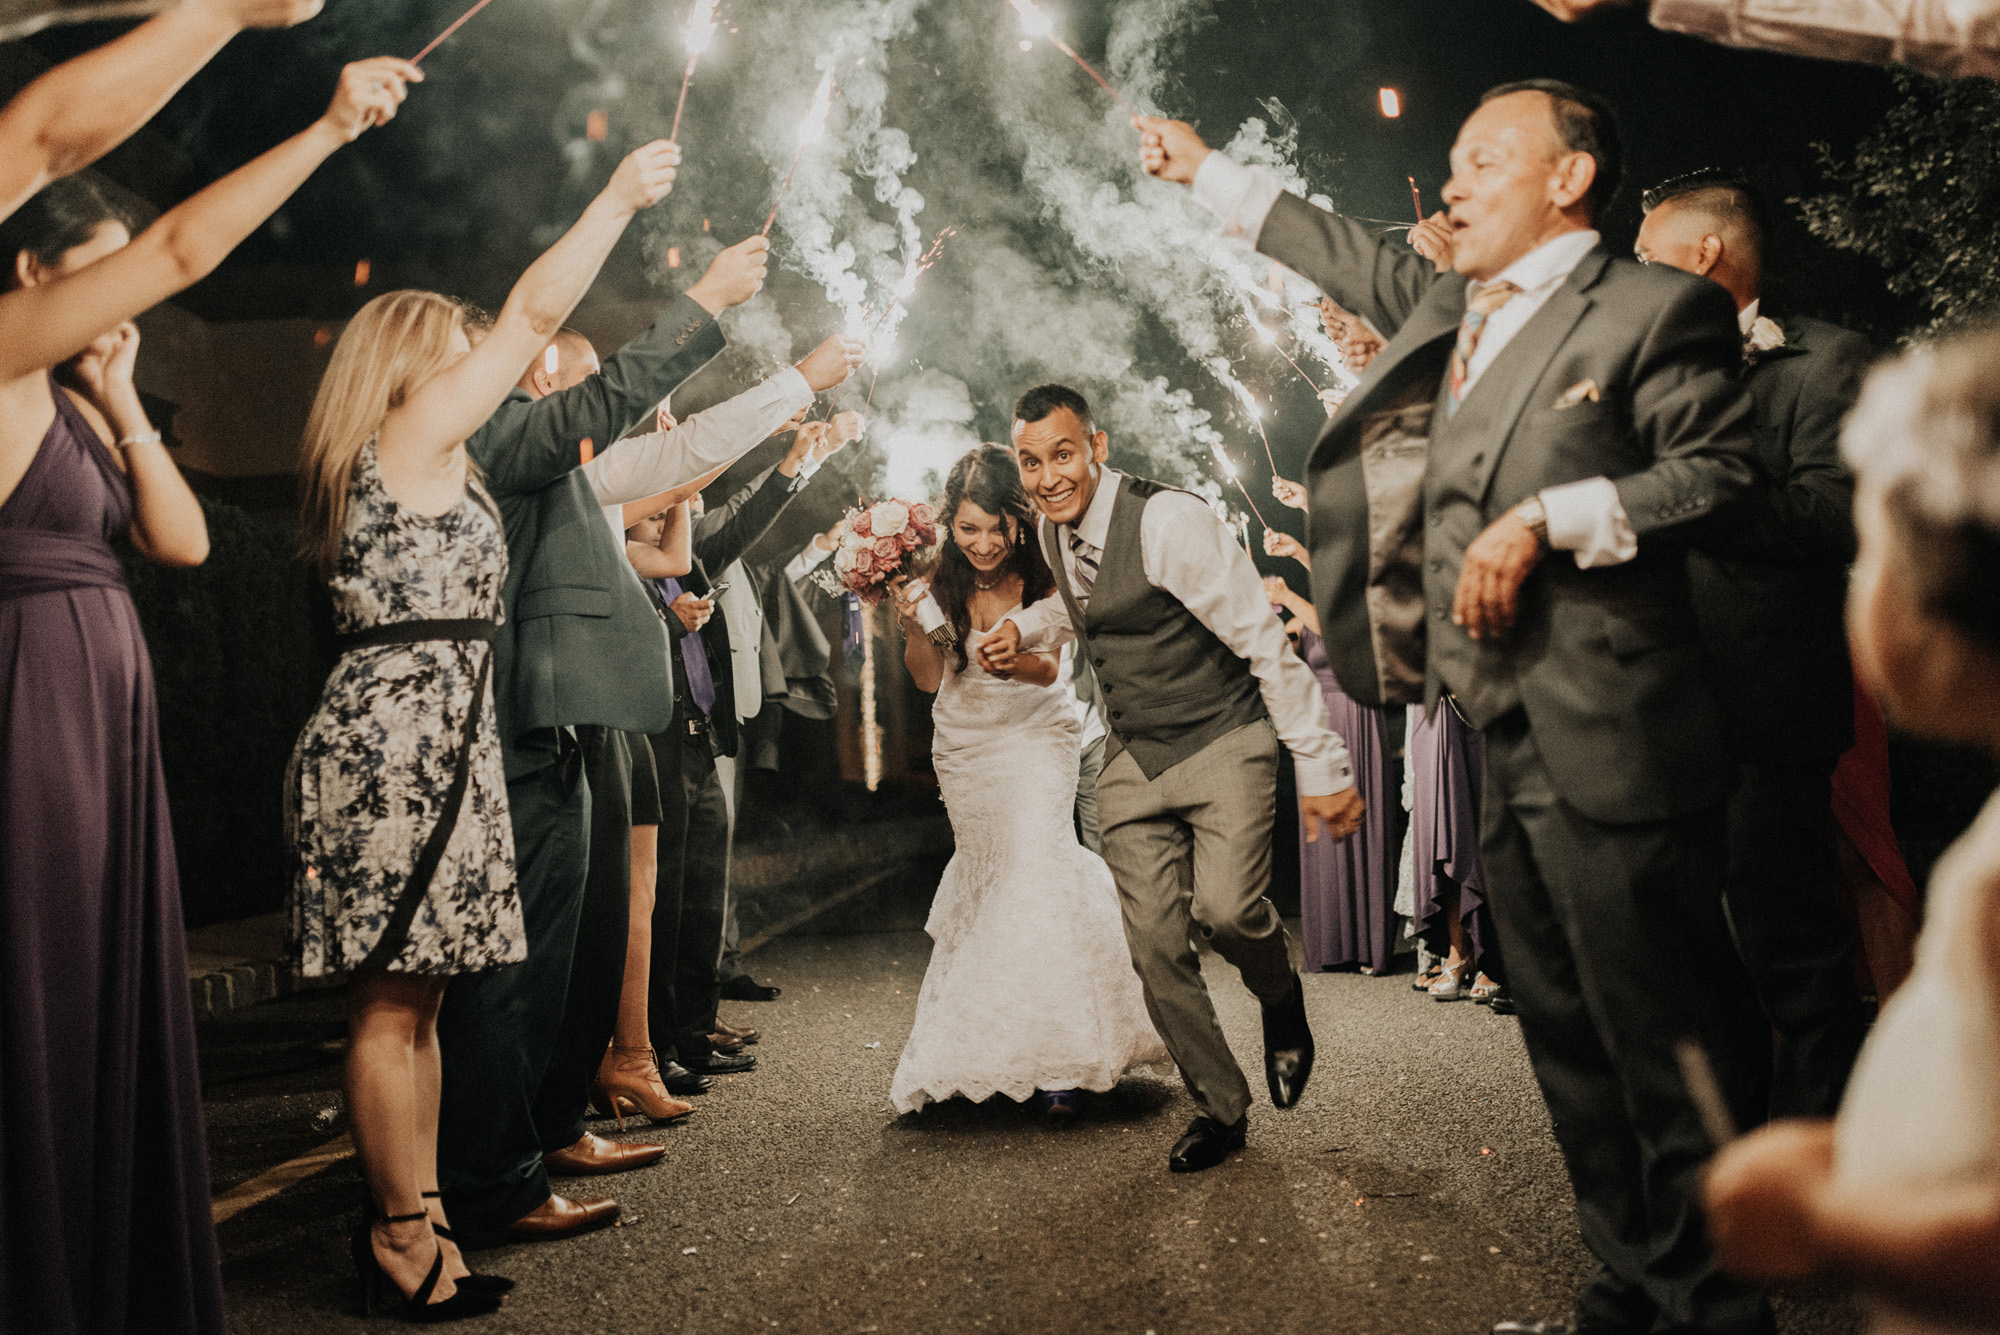 New Jersey Wedding Photographer sparkler exit radisson hotel portland oregon seattle washington send off exit latino bend beaverton northwest west coast photos (Copy)